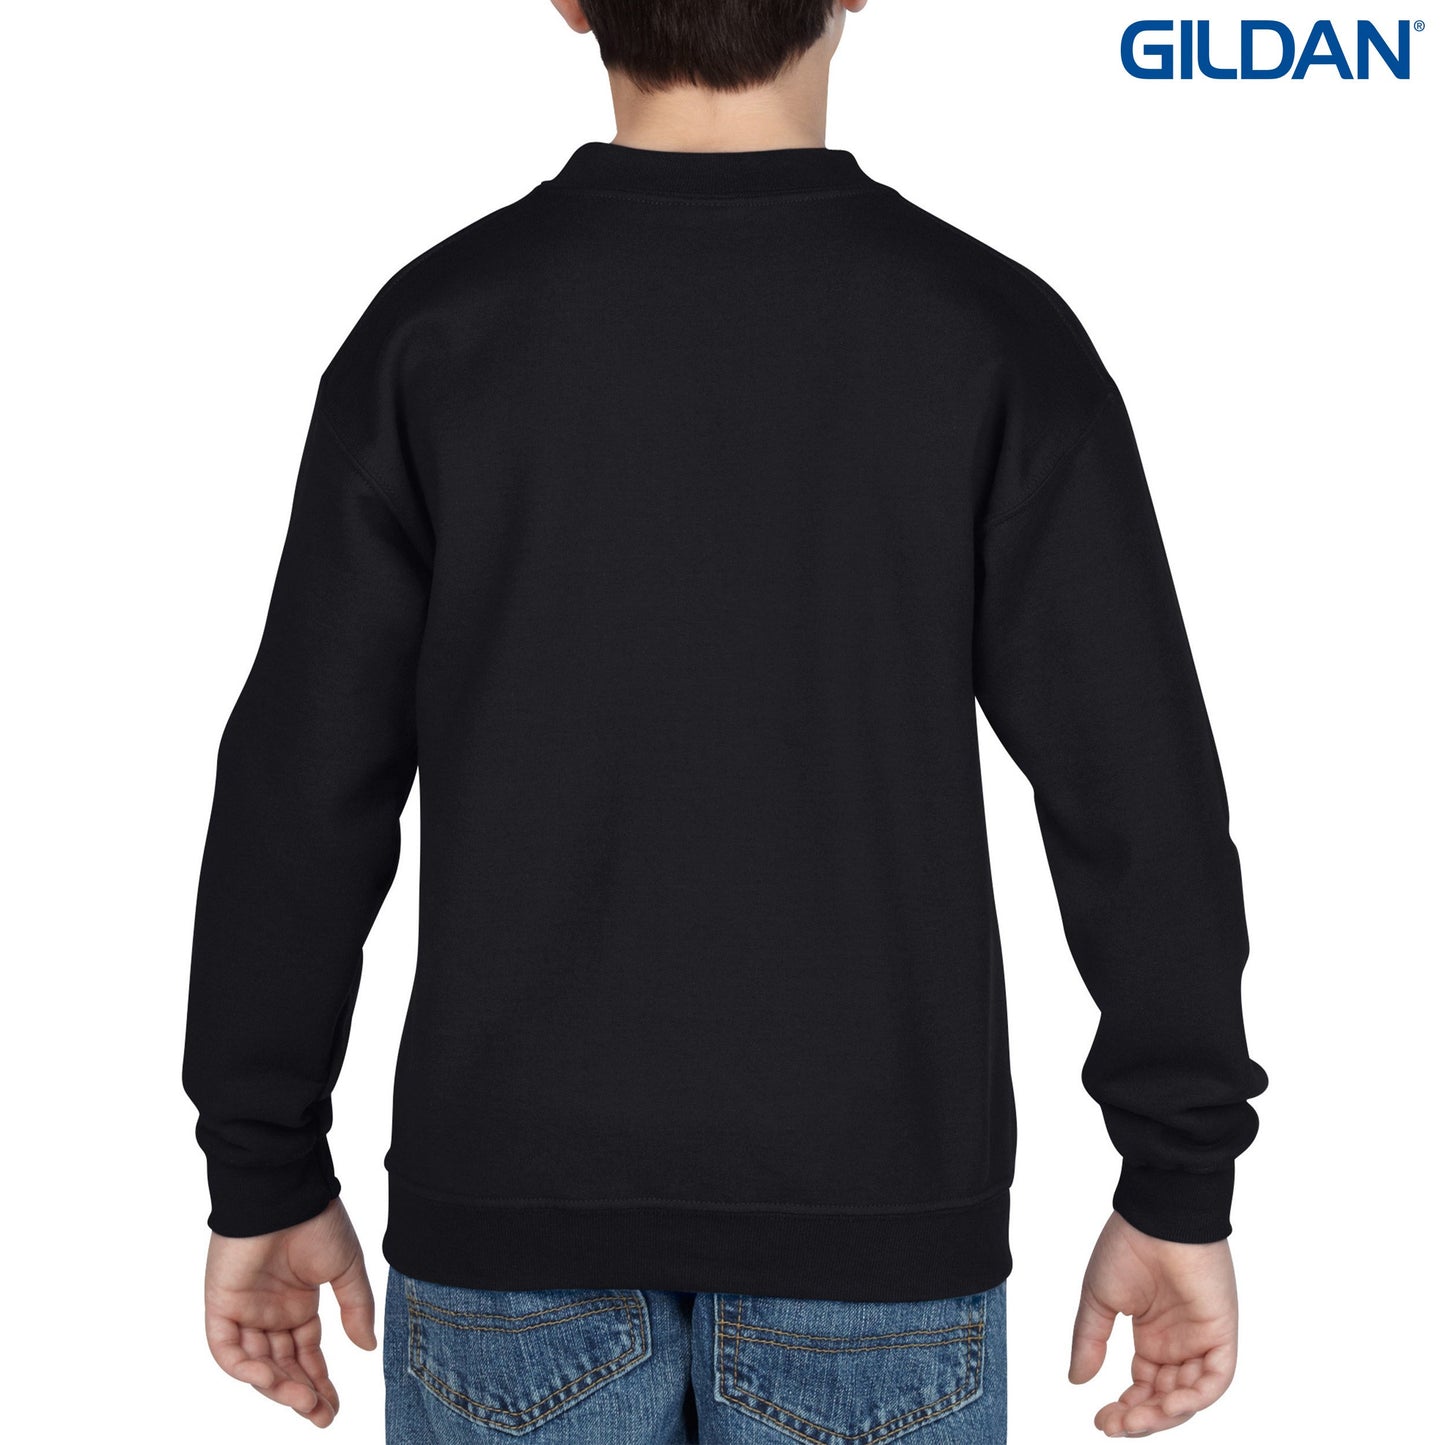 18000B Gildan Heavy Blend Youth Crewneck Sweatshirt